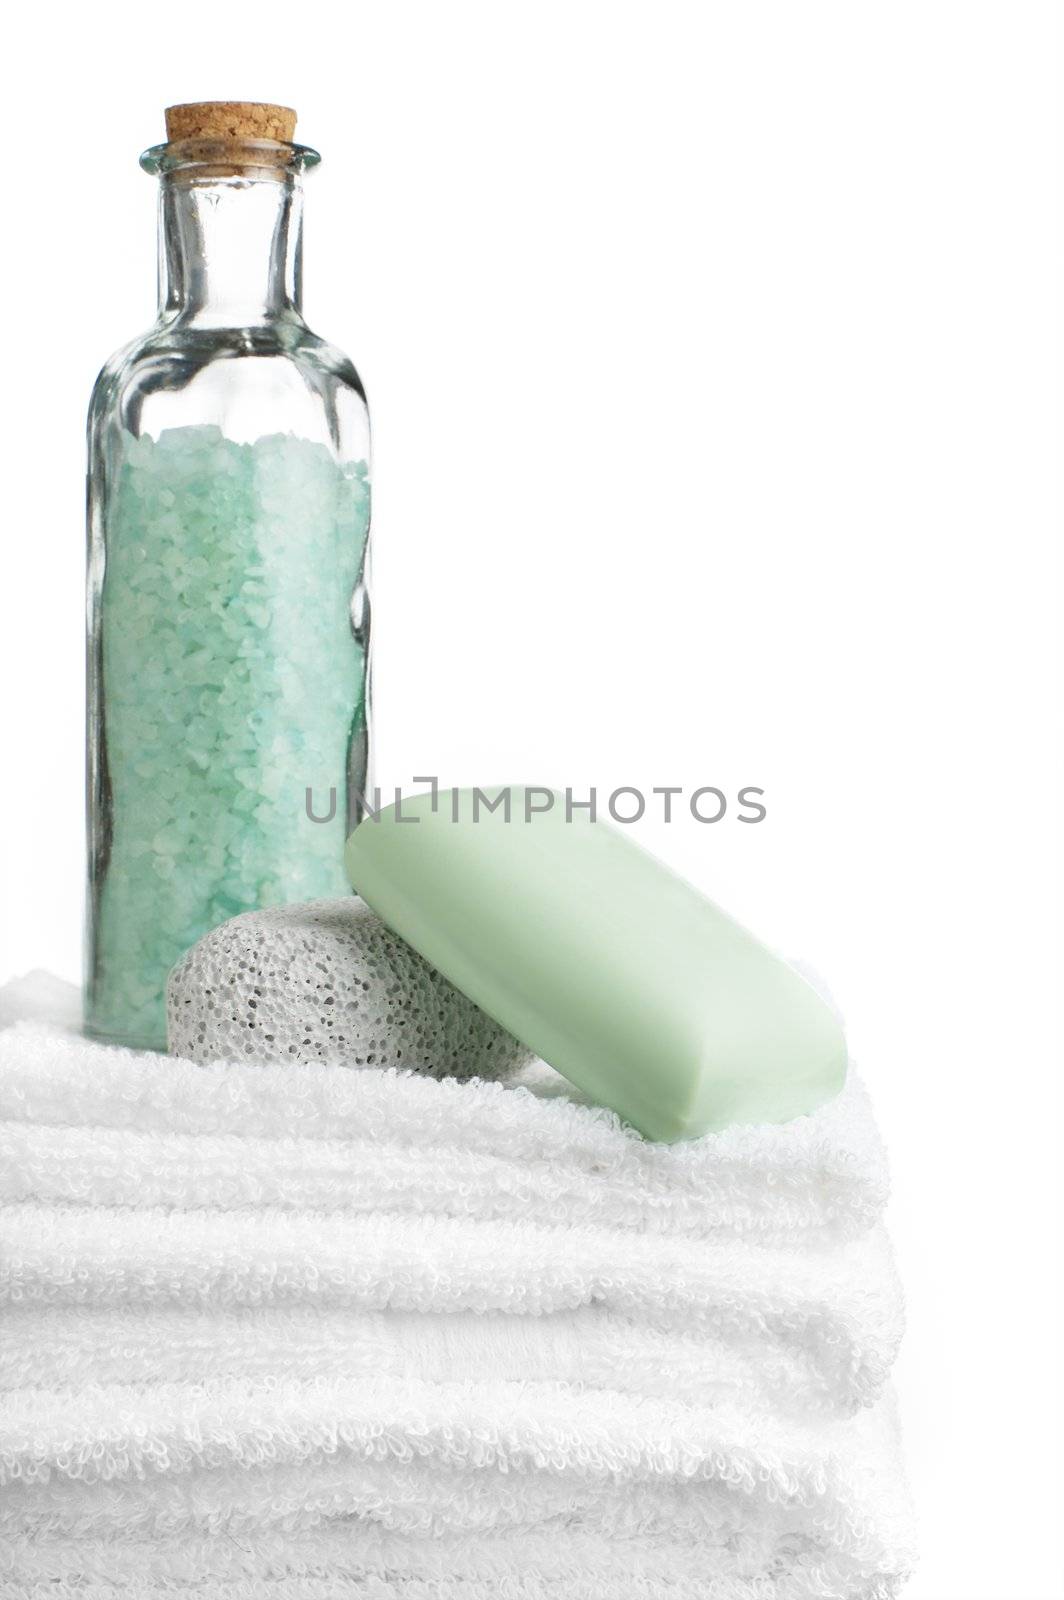 Bath salt, pumice stone, bar soap, and towels against white.